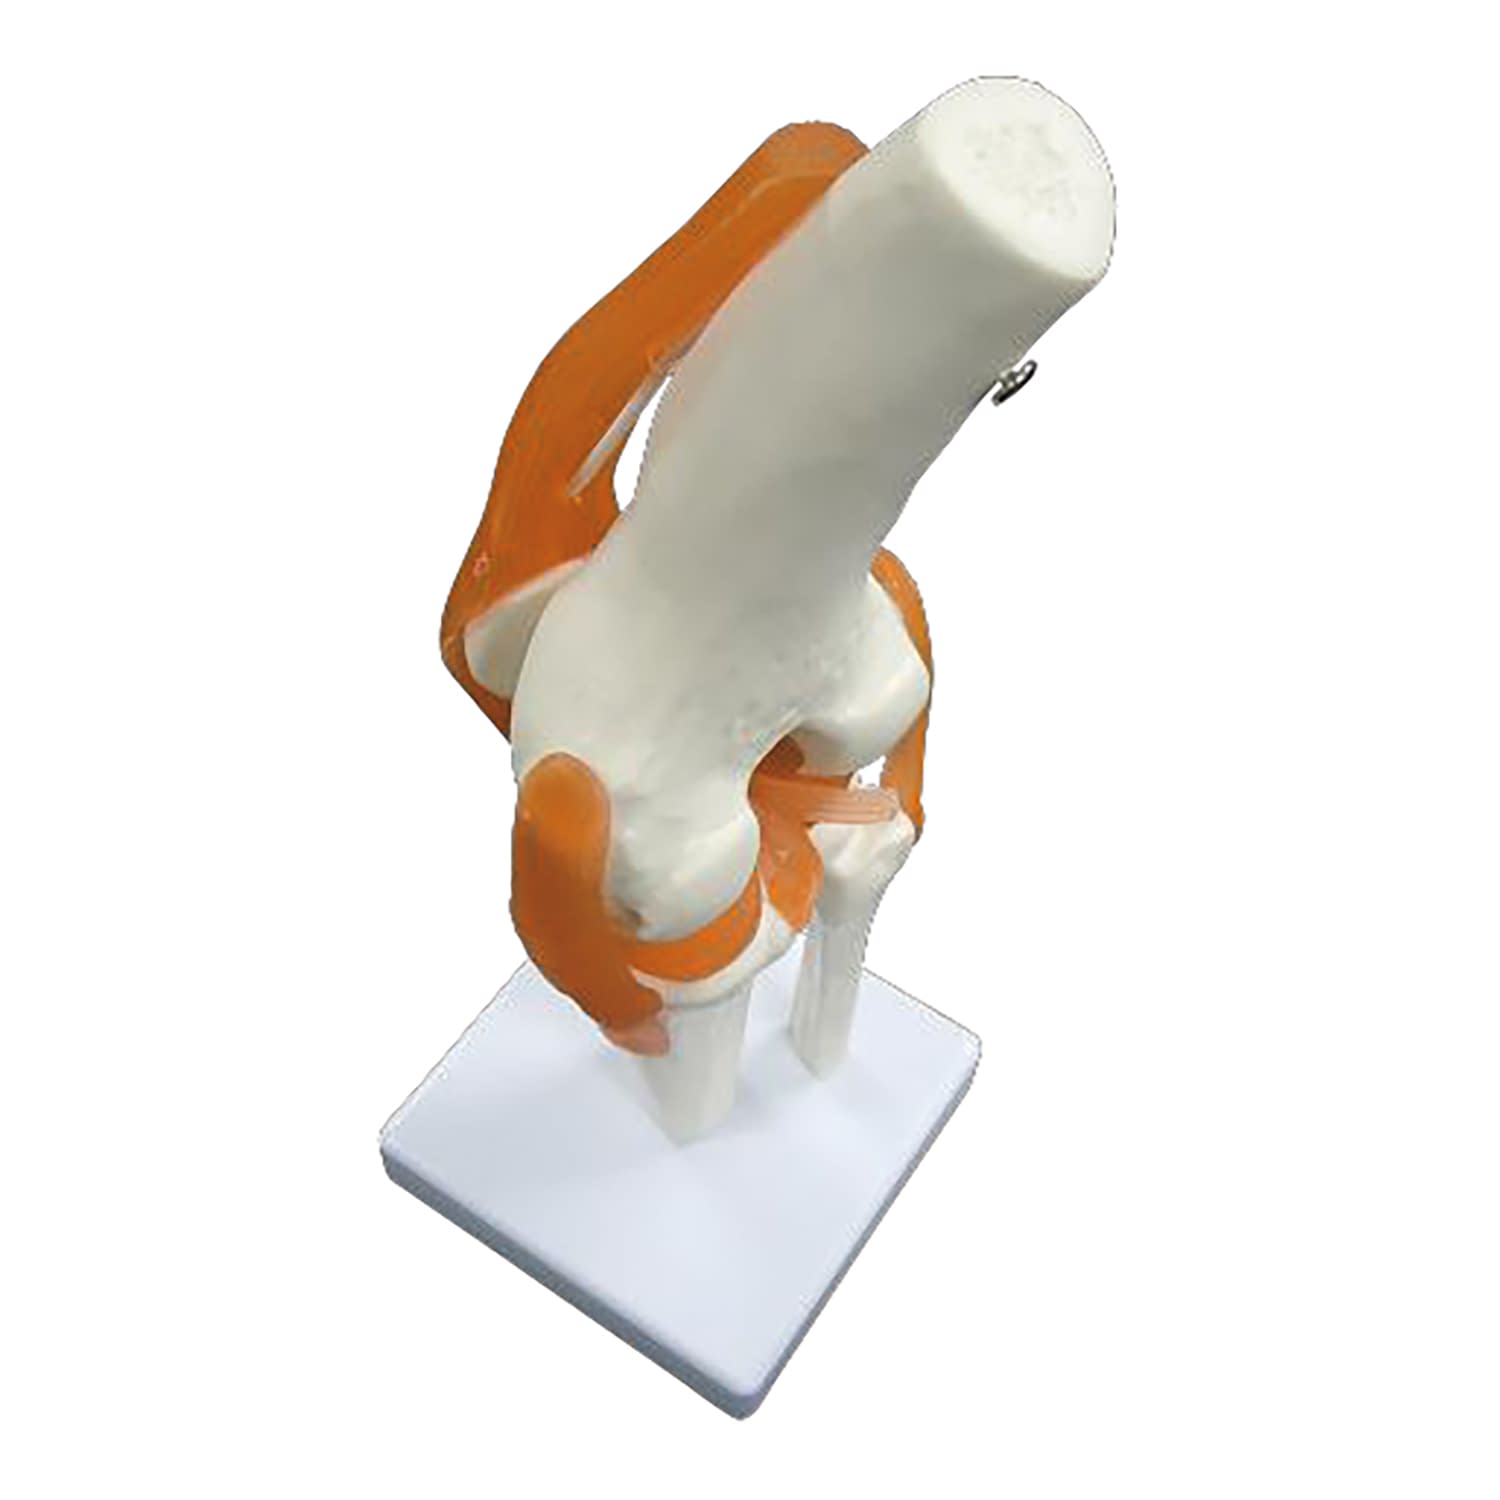 実物大 靭帯付き膝関節模型 1台 NGD 25-5558-00 人体模型 膝関節モデル